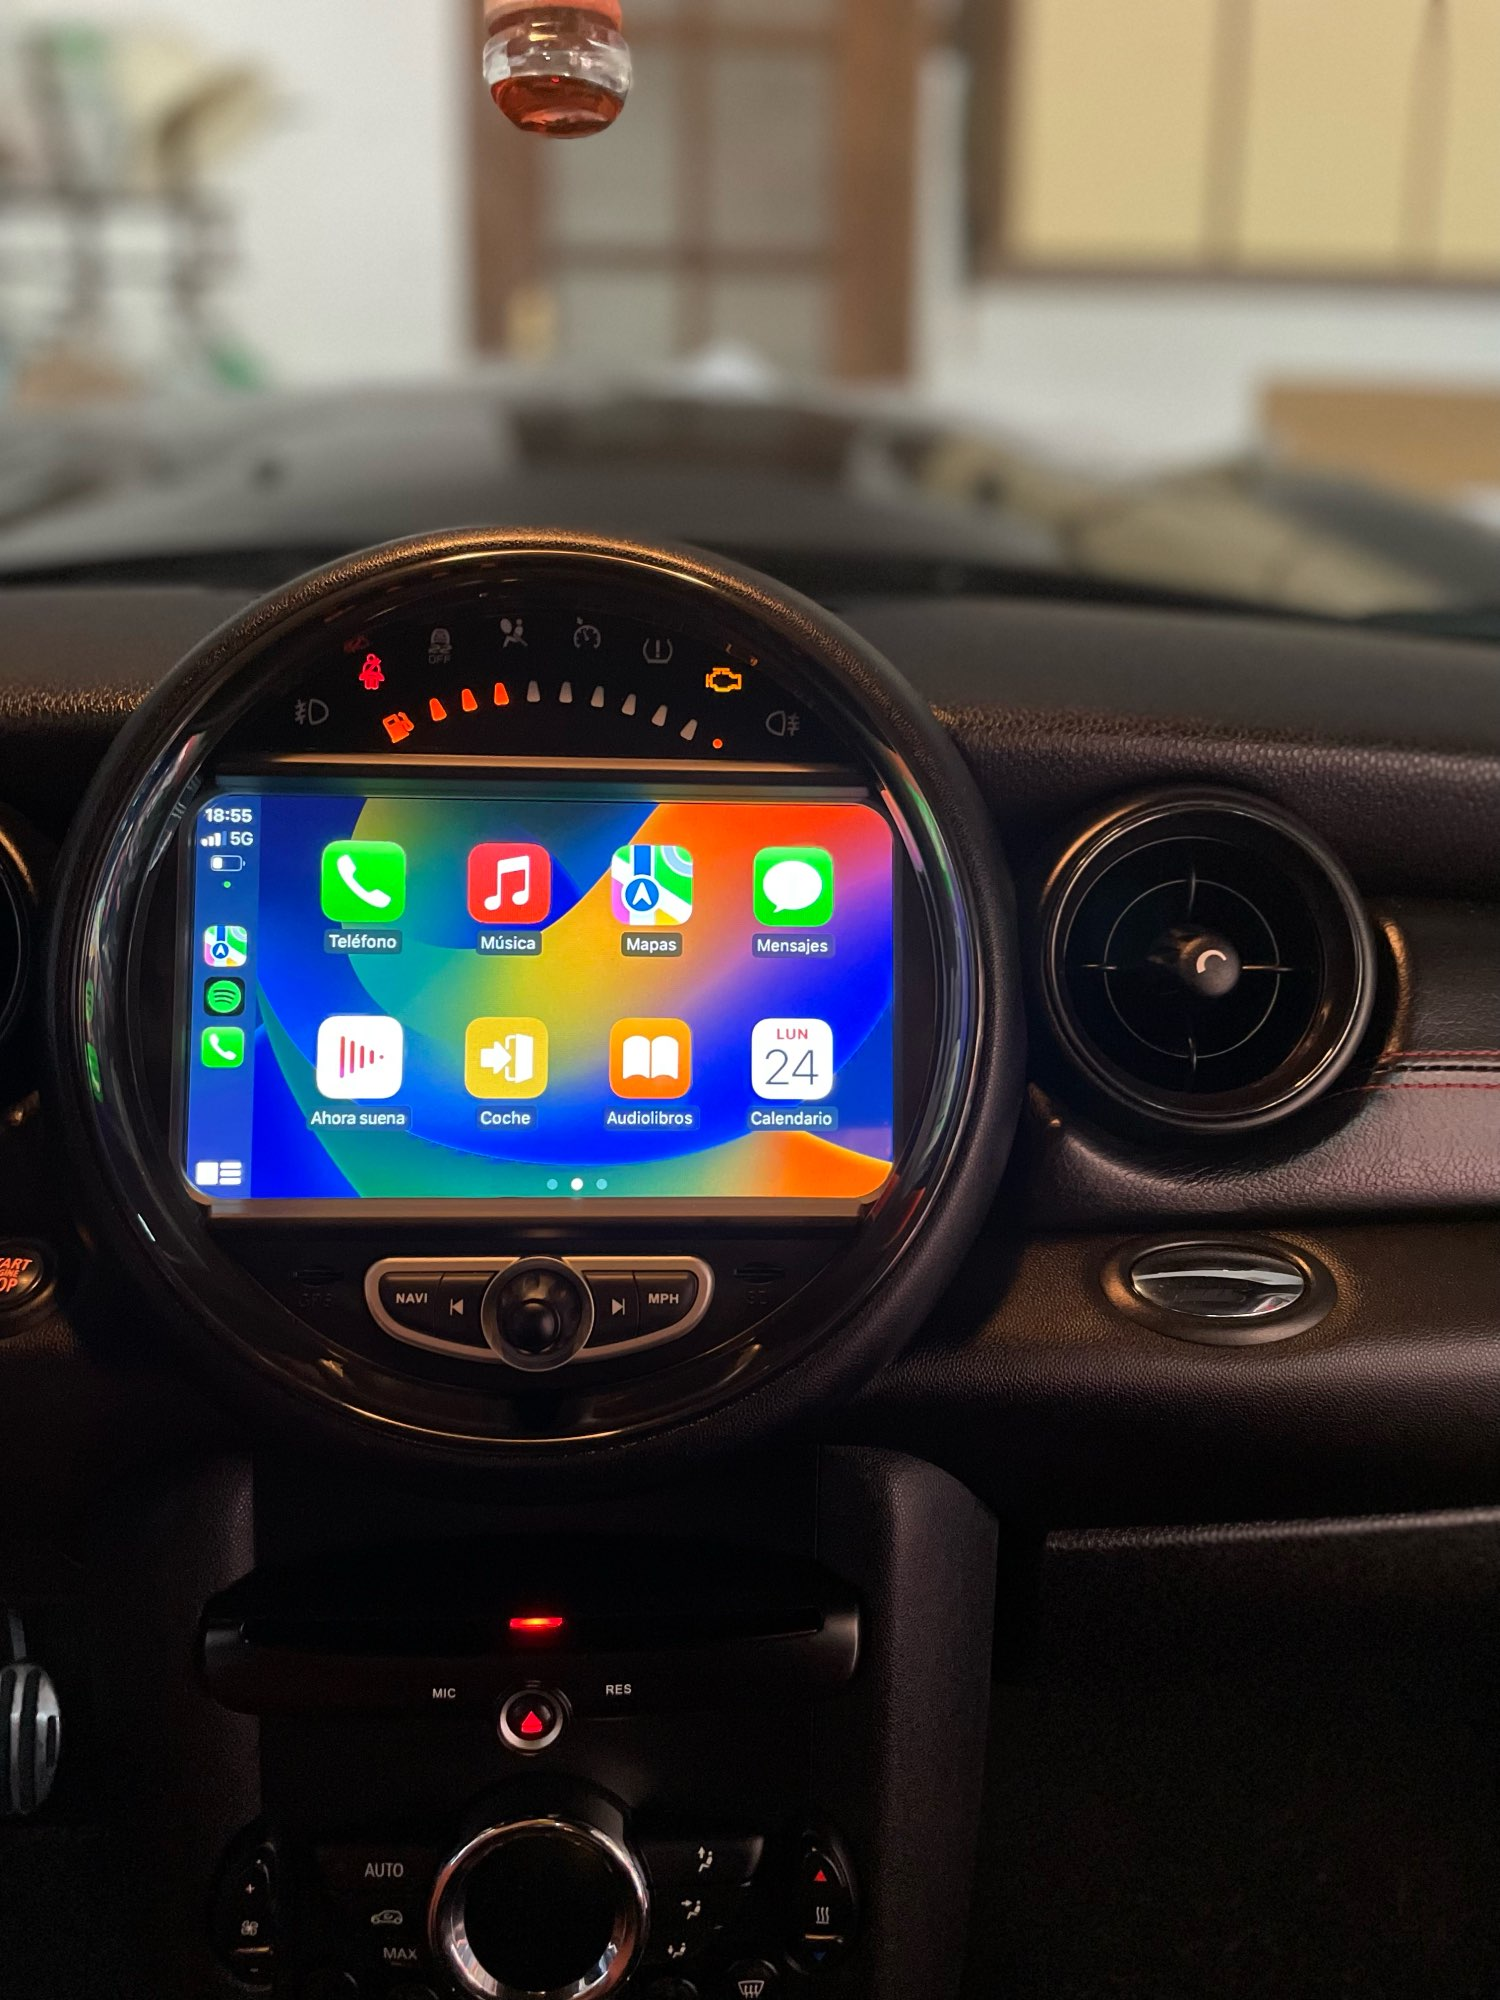 WITSON 9 inch Multimedia Android 12 Car GPS Autoradio Bluetooth Audio For  BMW Mini Cooper R50 R52 R53 R56 R60 2000 - 2020